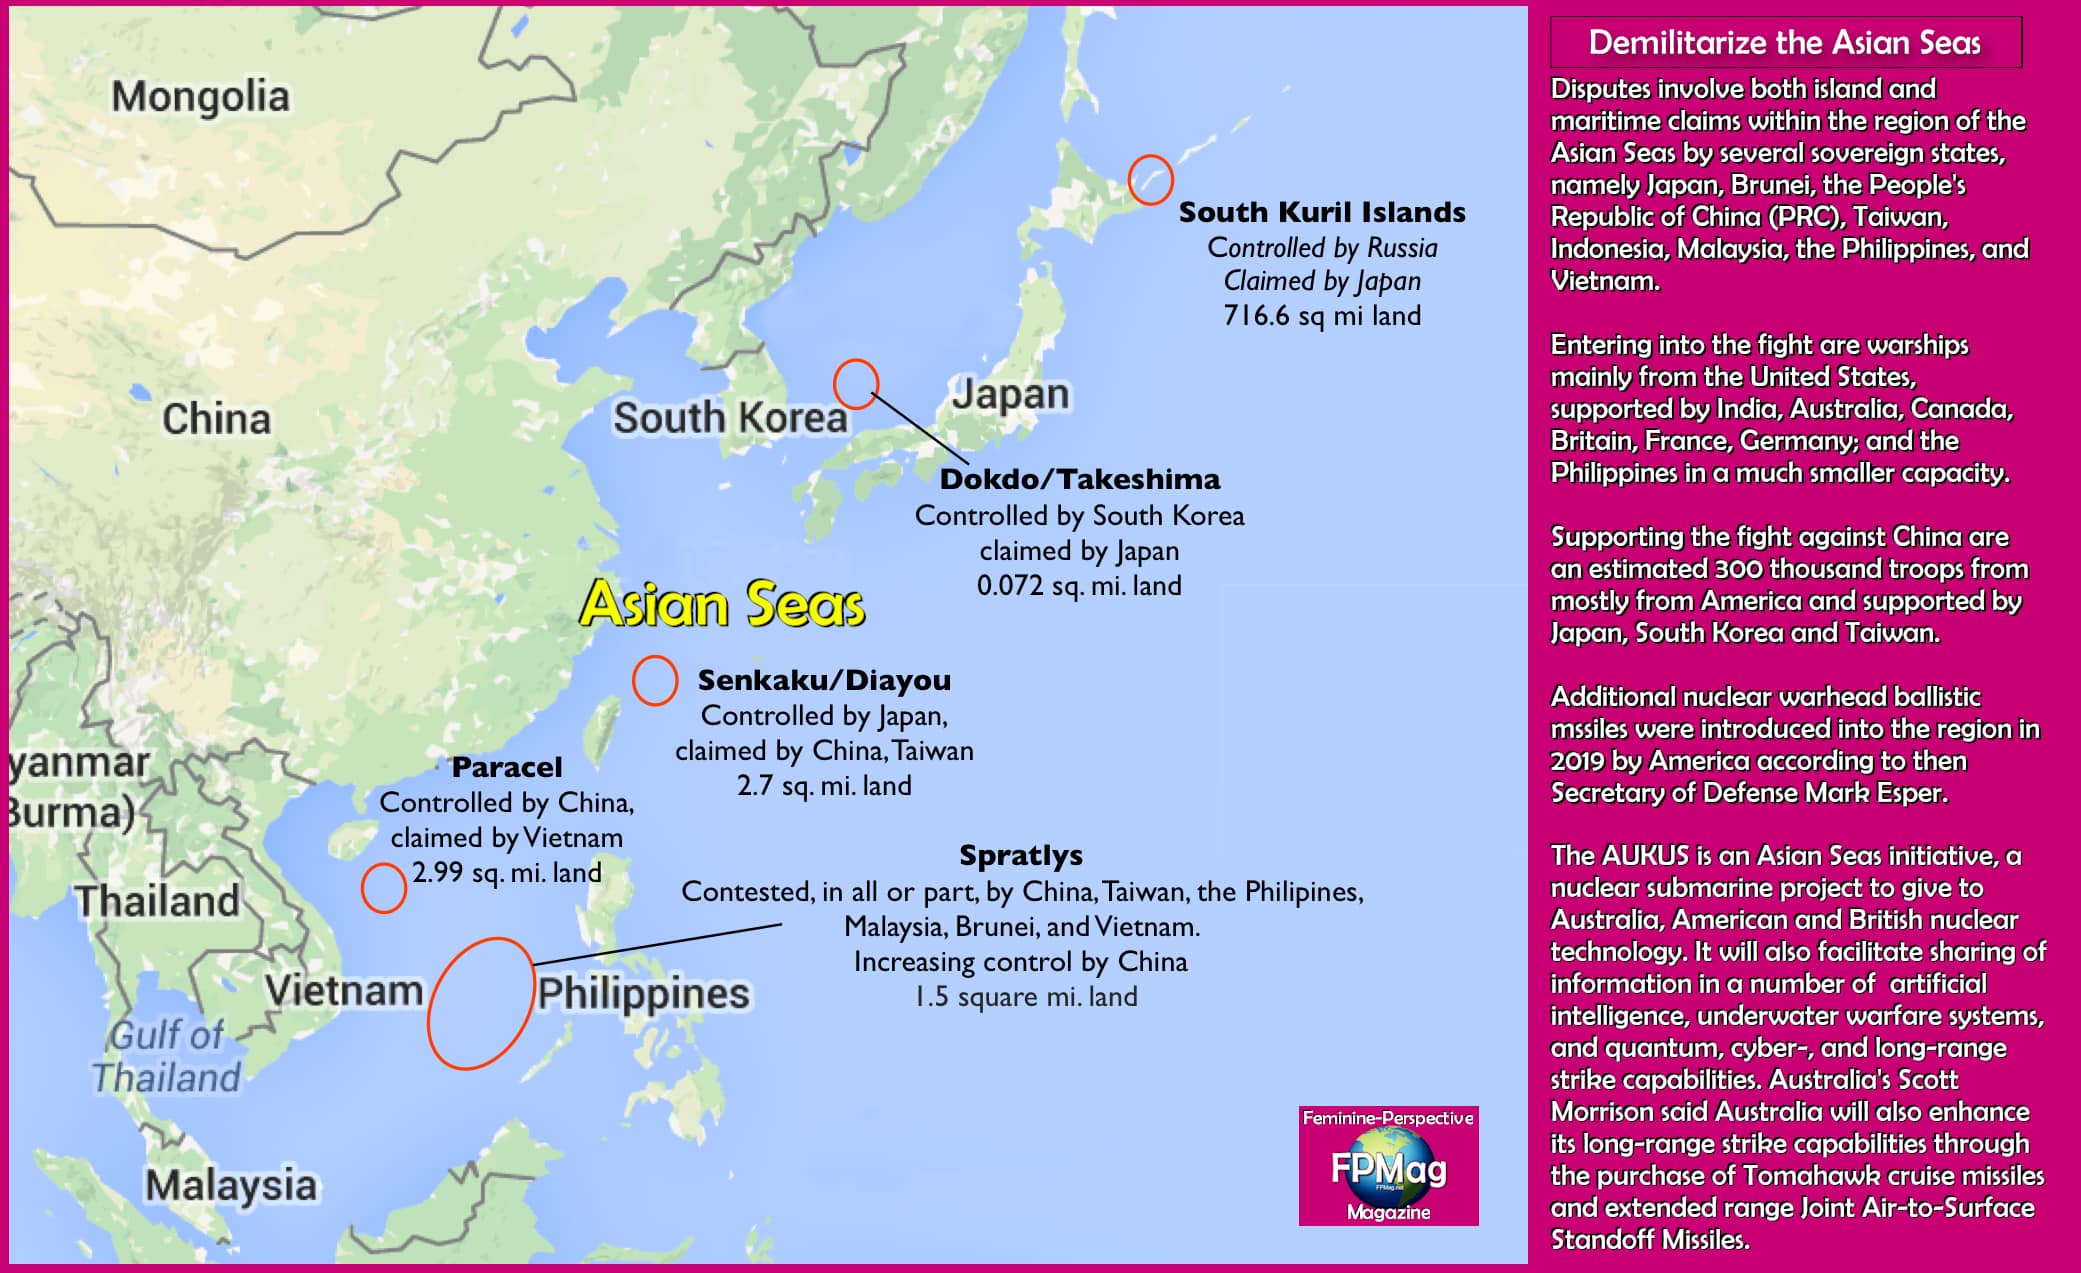 Demilitarize Asian Seas